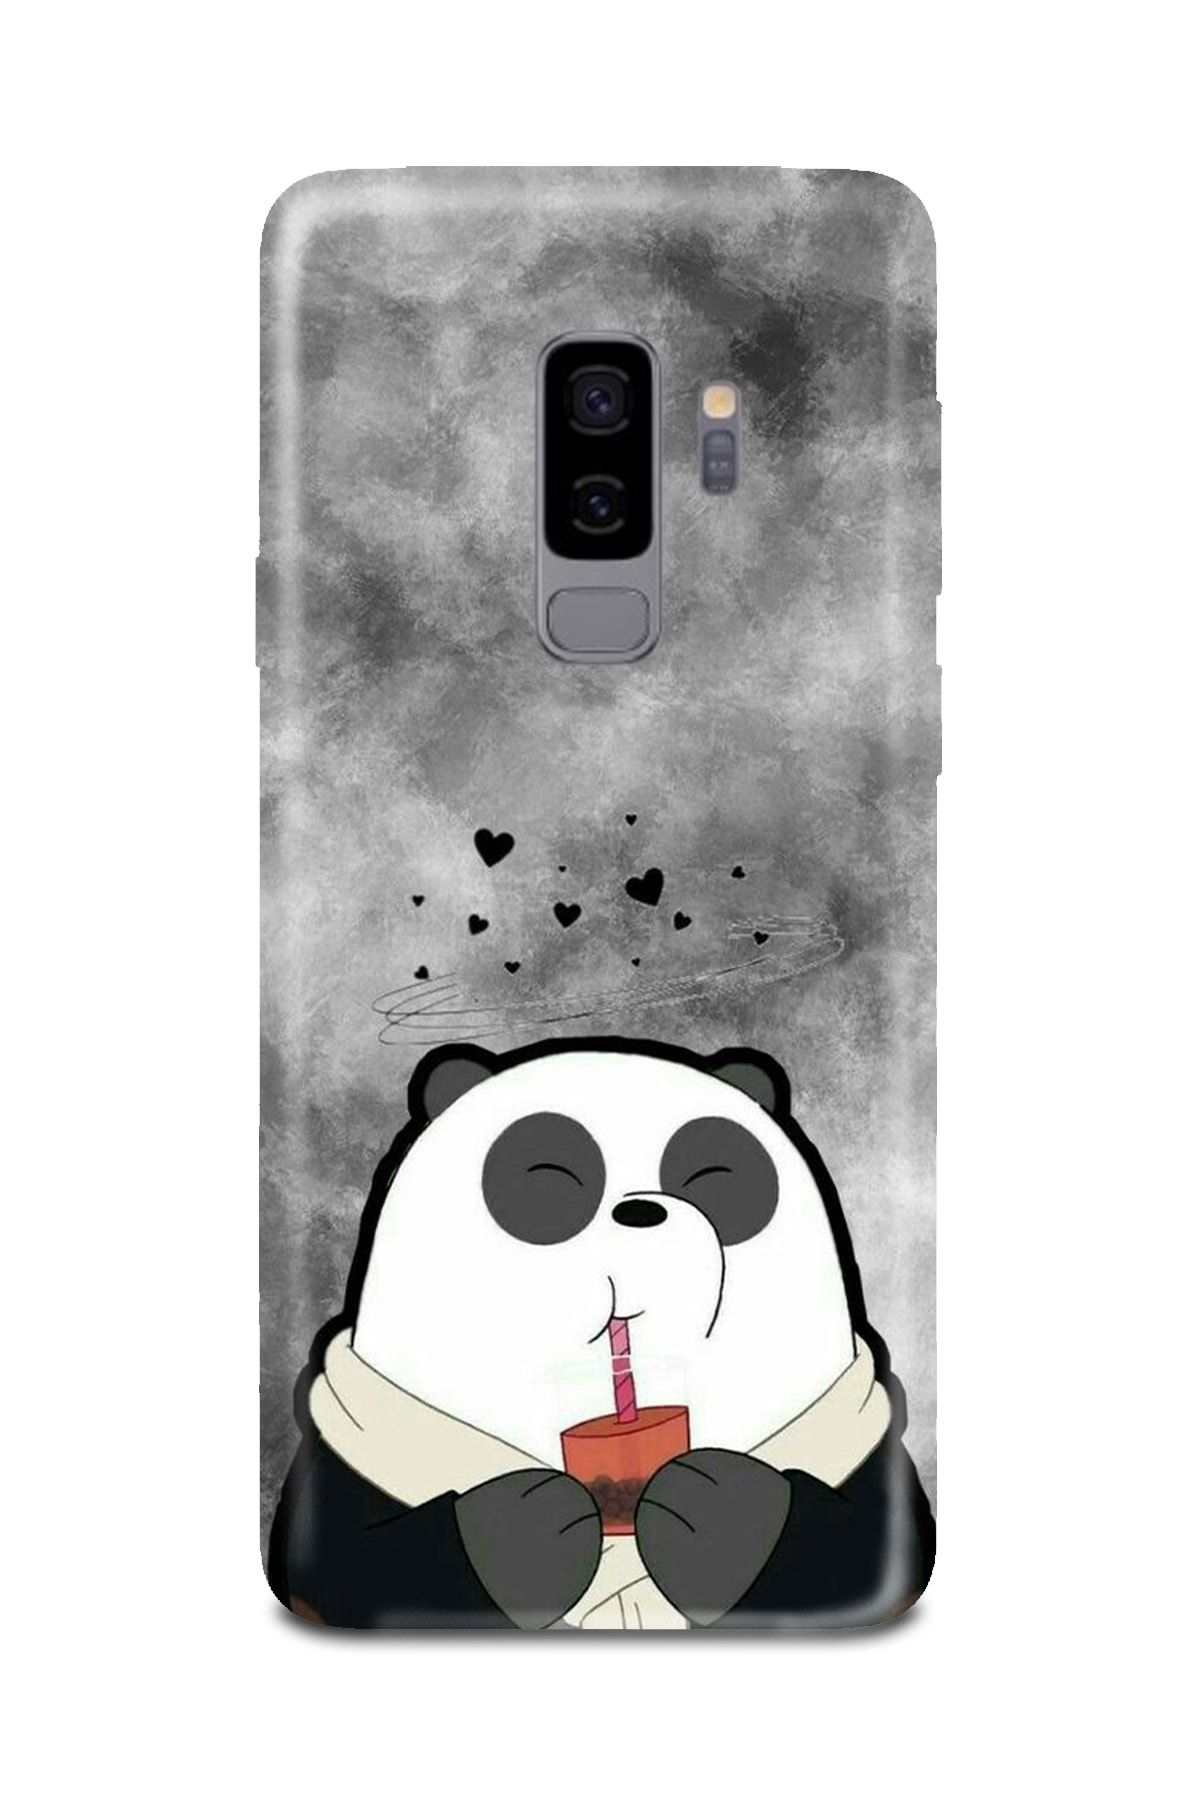 PERAX Samsung Galaxy S9 Plus Panda Desenli Telefon Kılıfı Sams9plus-00001001-01